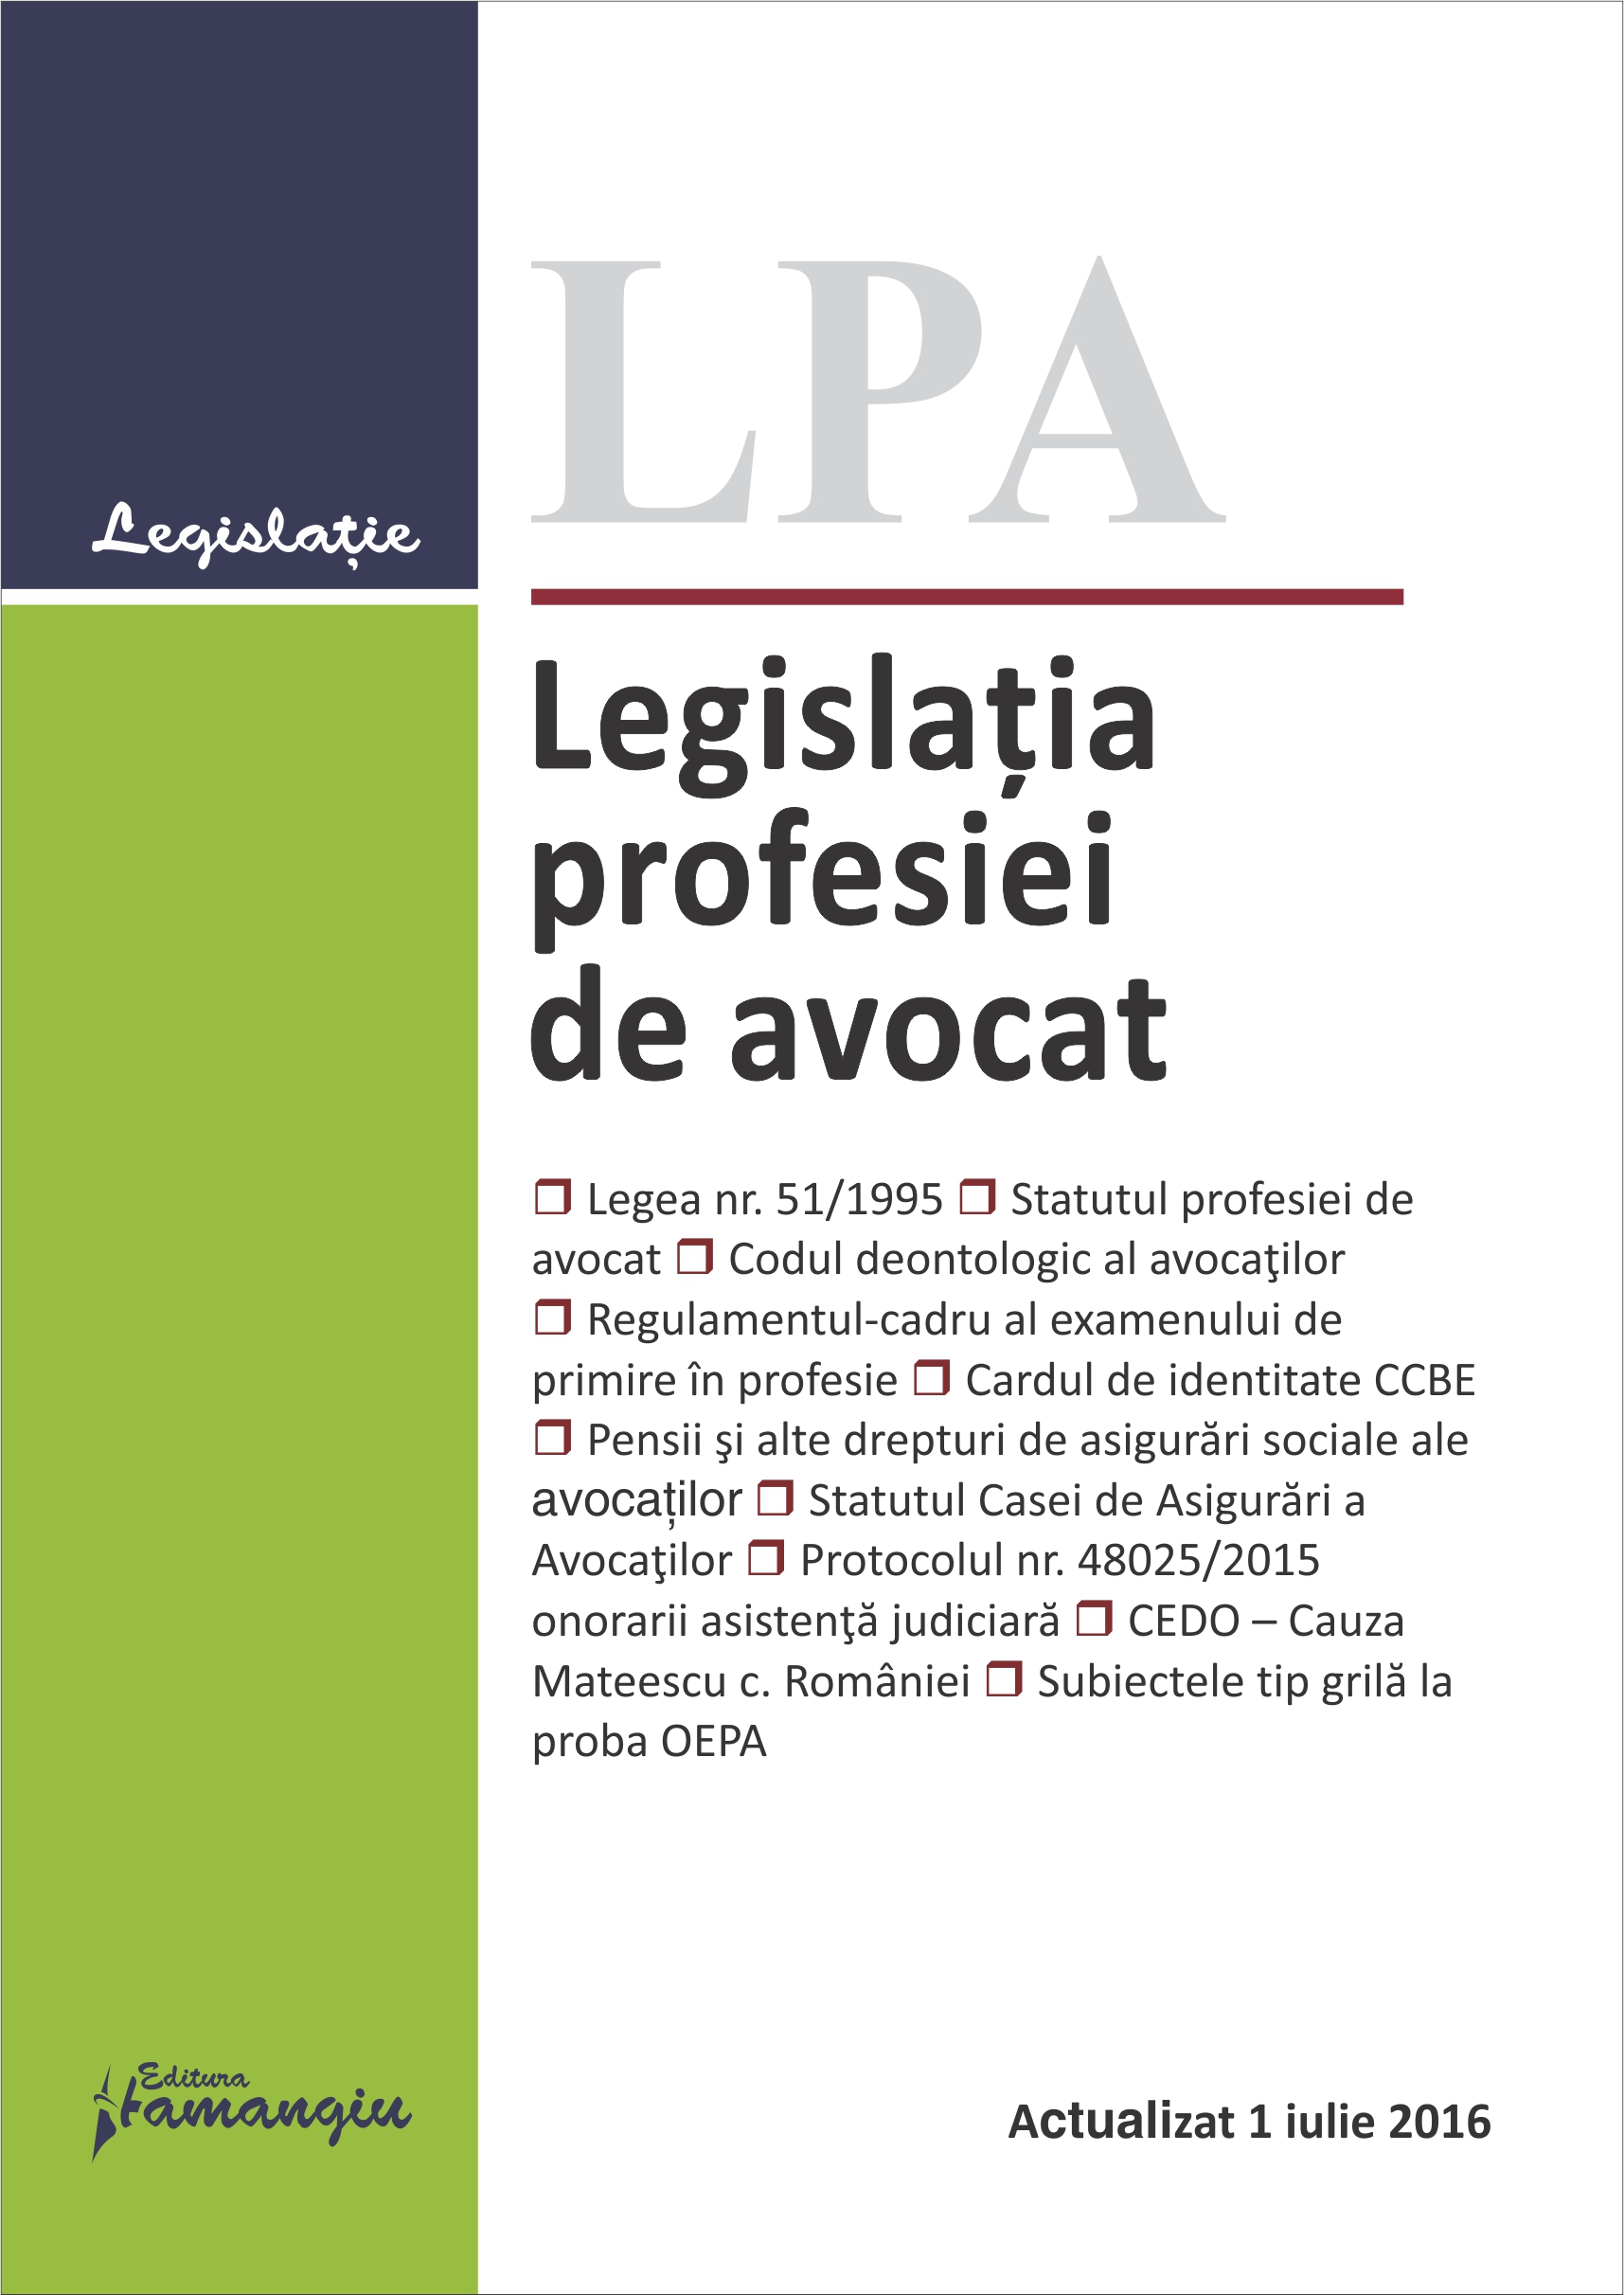 Legislatia profesiei de avocat act. 1 iulie 2016